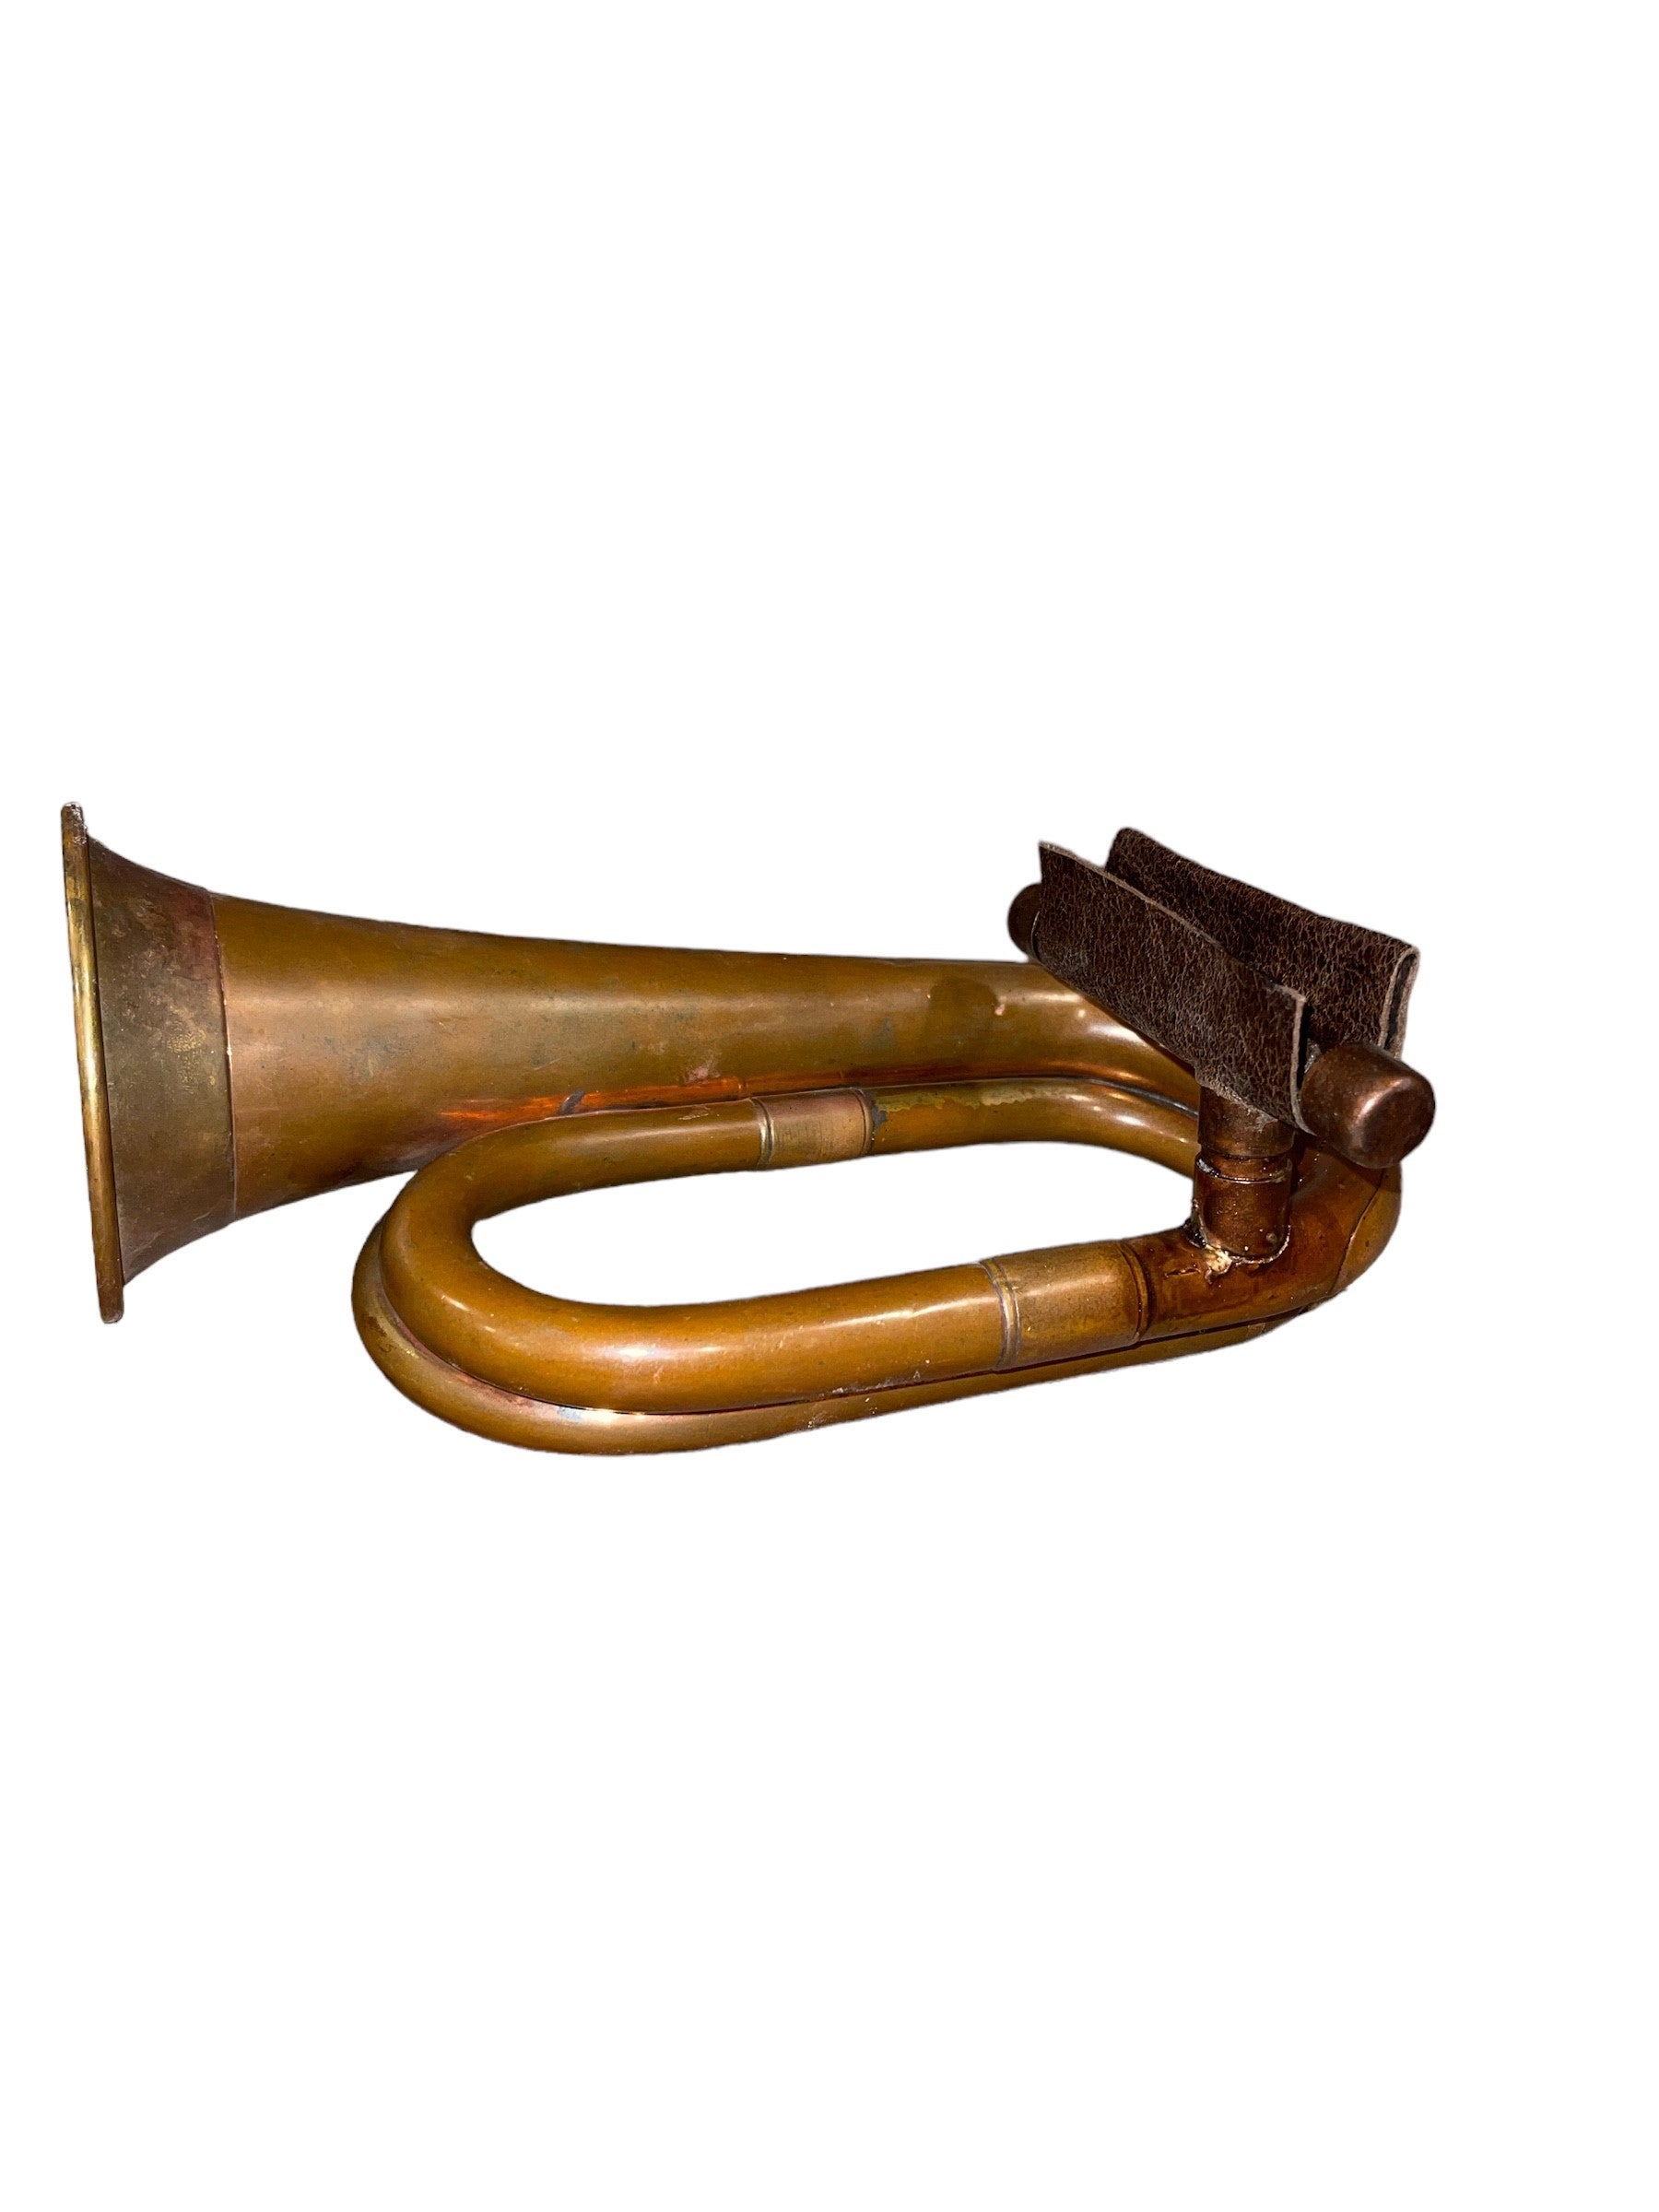 The Copper Bugle